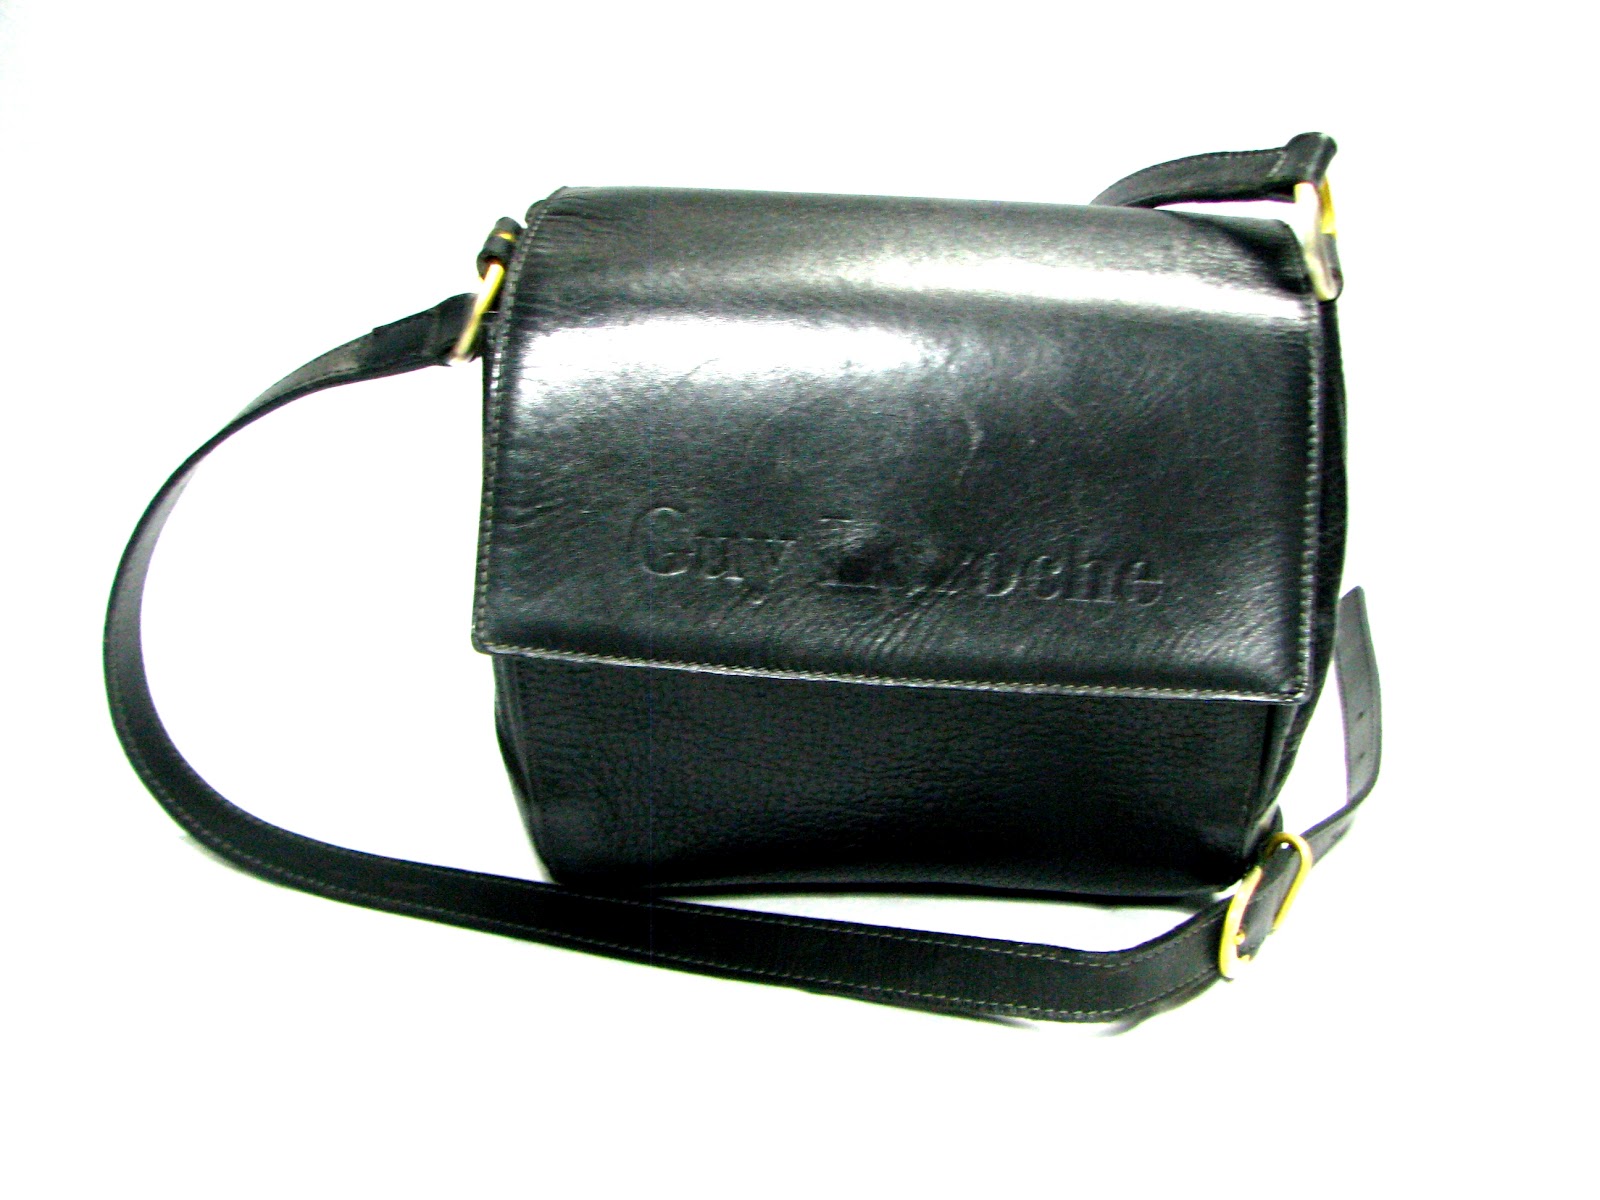 Guy Laroche Leather Bag